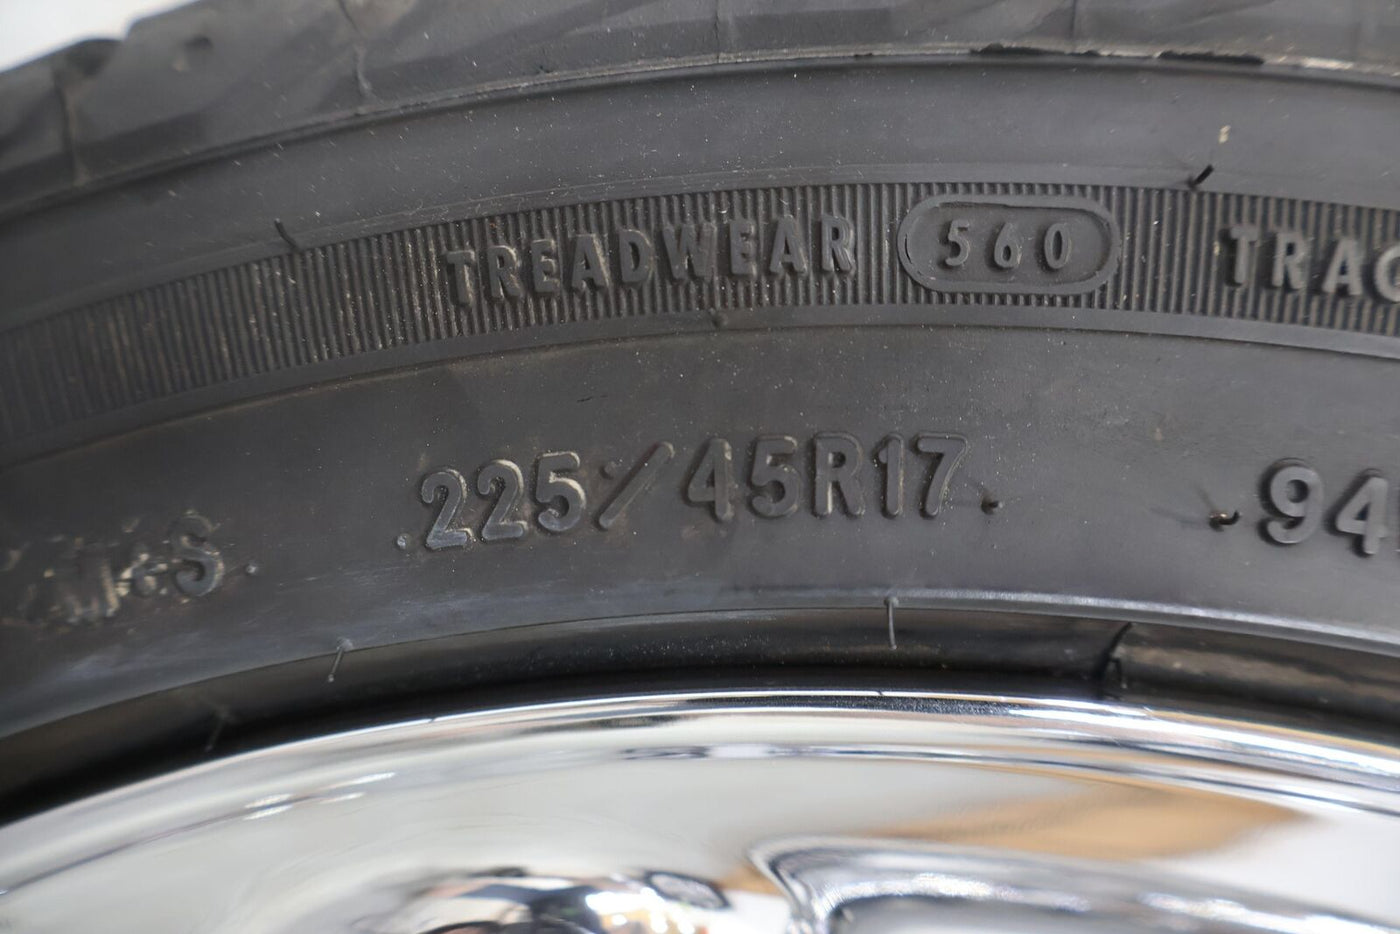 00-02 Plymouth Prowler 17" & 20" Full Wheel Set W/Tires (Chrome) W/Center Caps